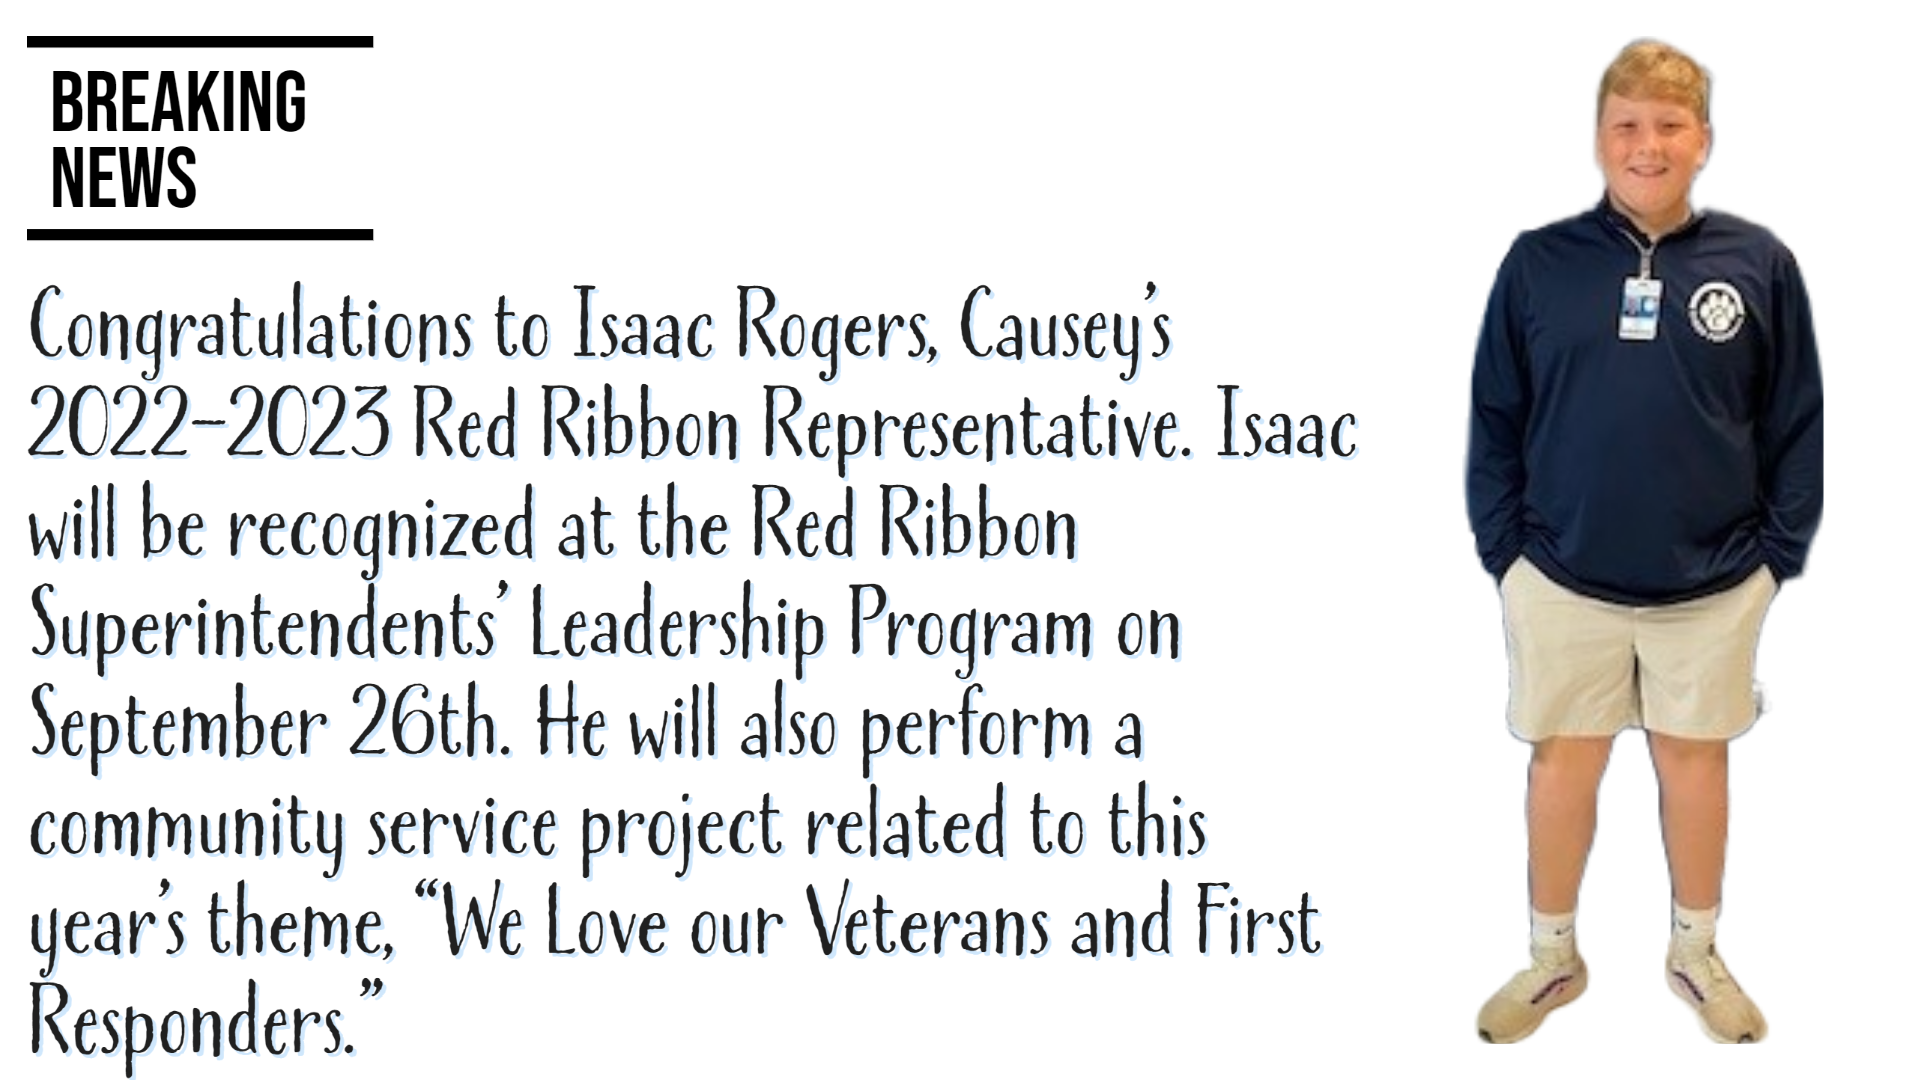 Red Ribbon Representative, Isaac Rogers